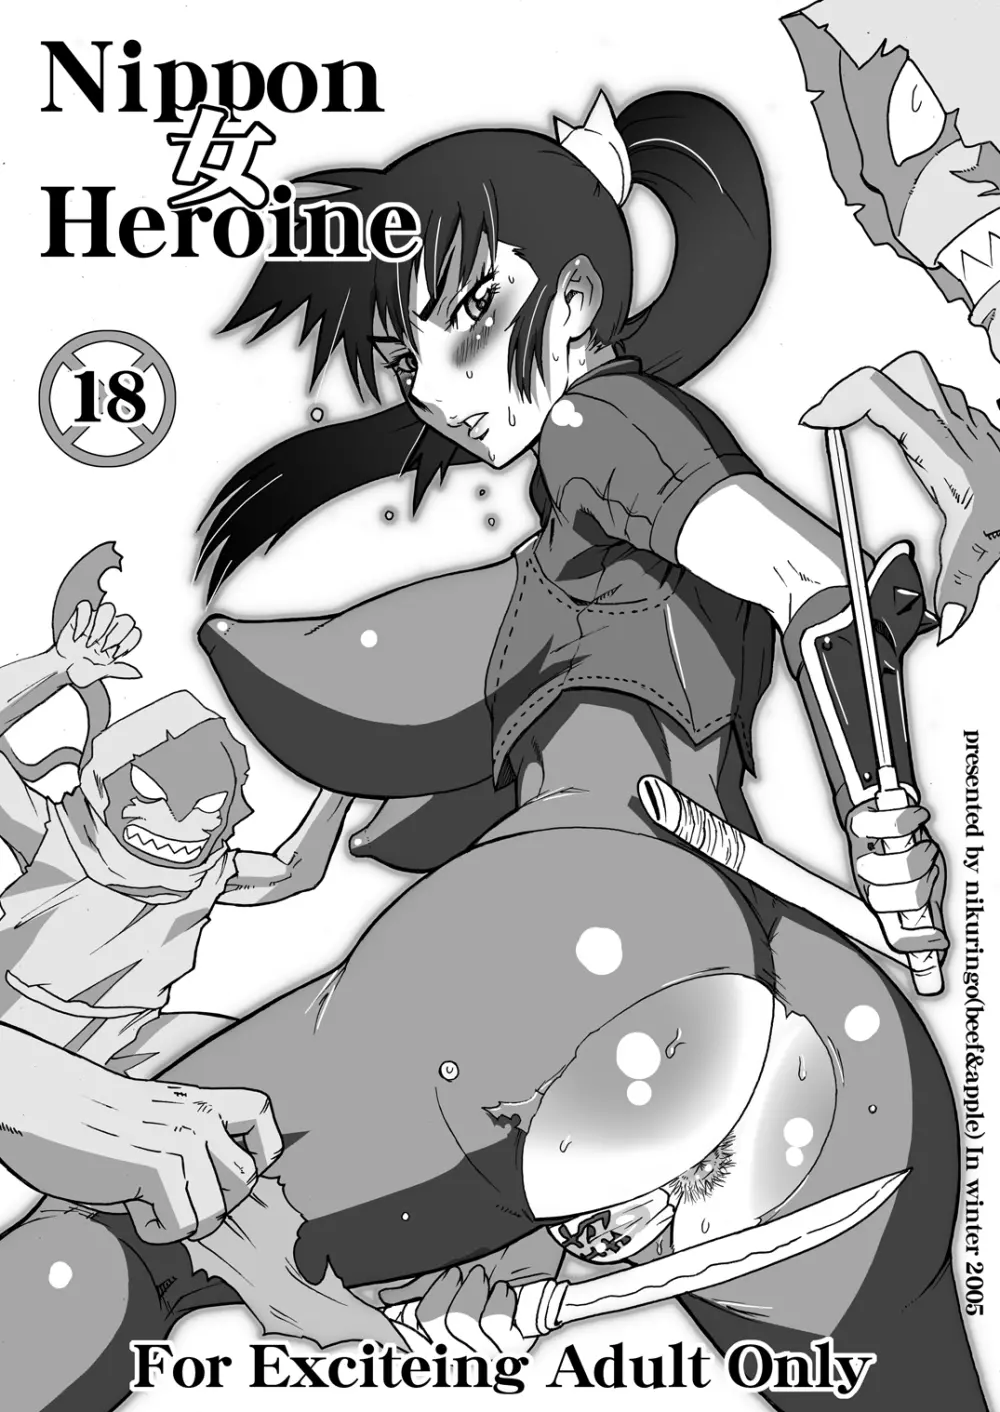 Nippon 女 Heroine